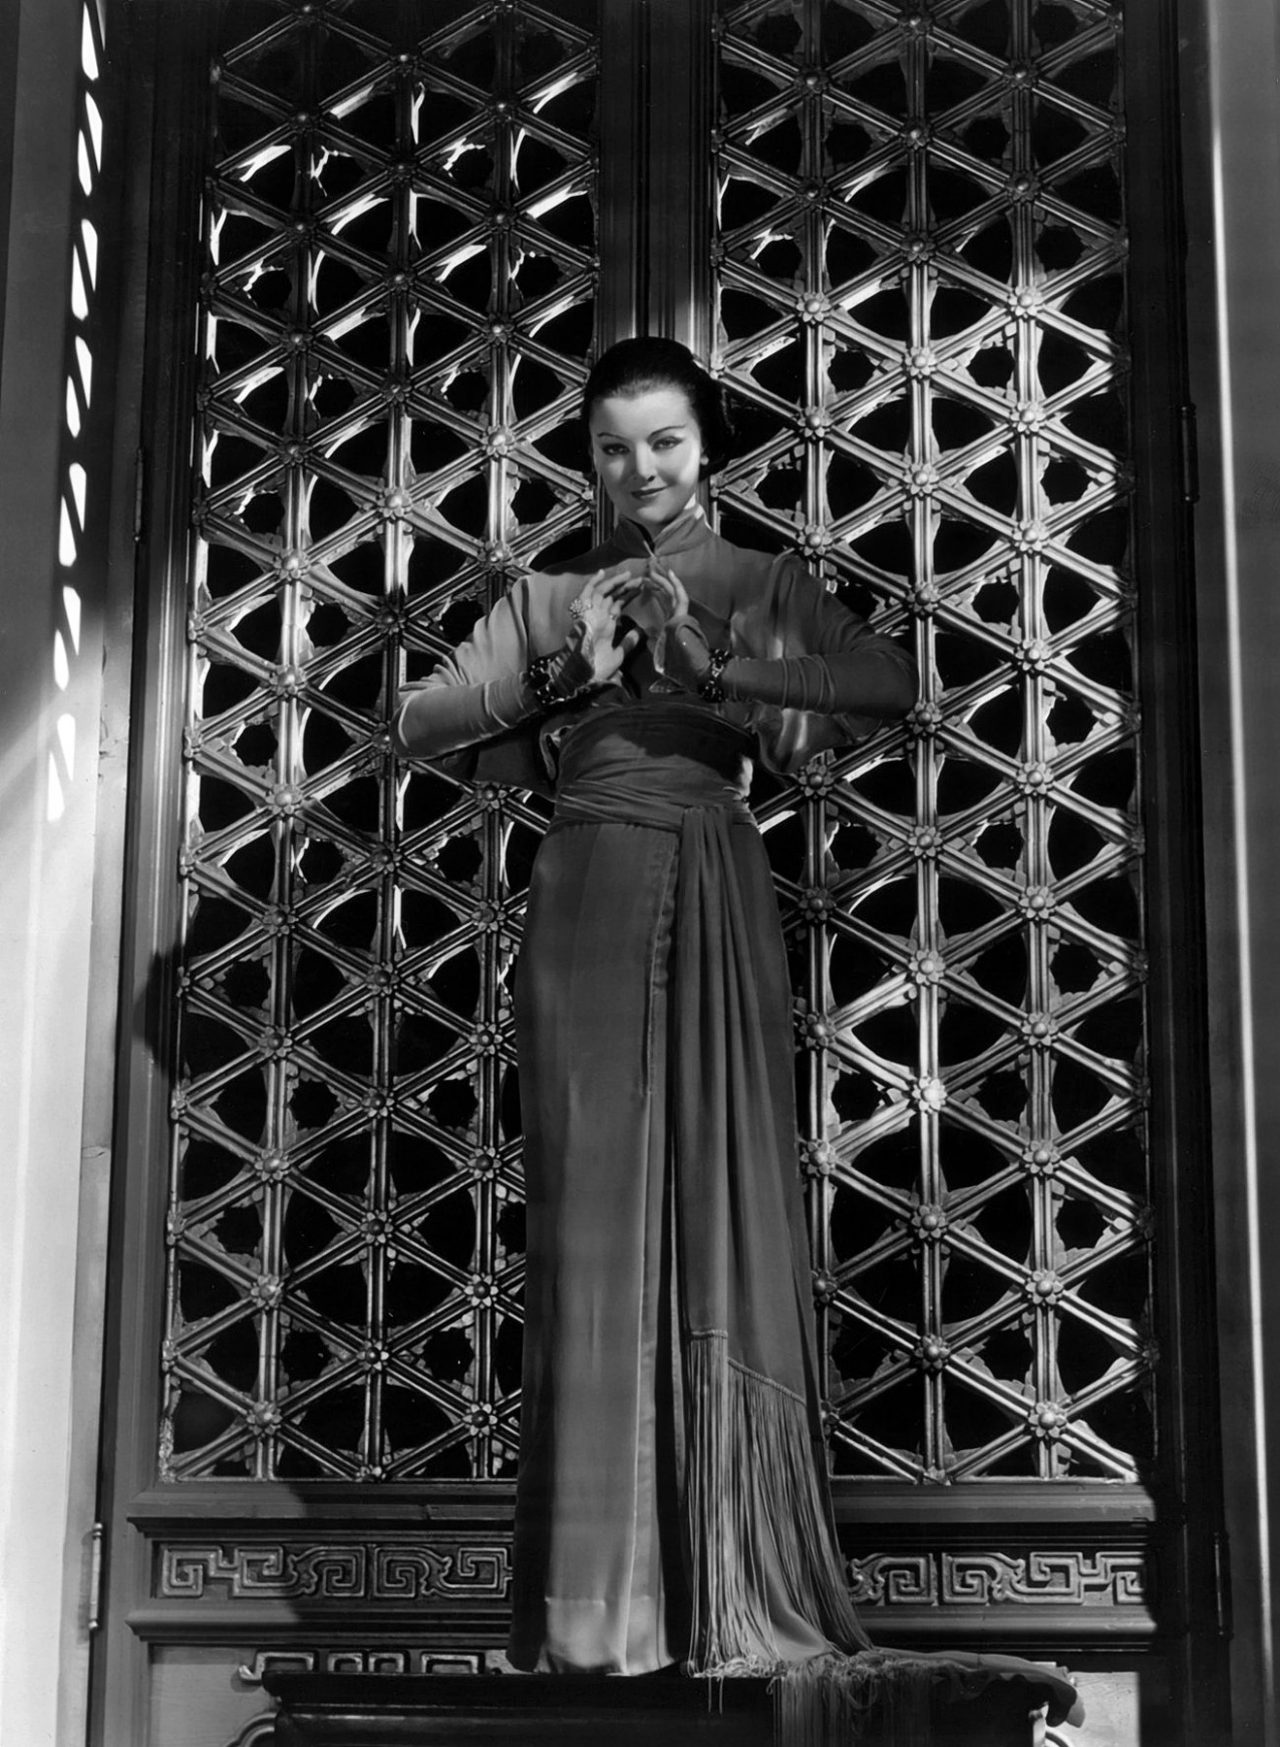 Actress Myrna Loy in "The Mask of Fu Manchu" Celebrity Photo Print 1932 